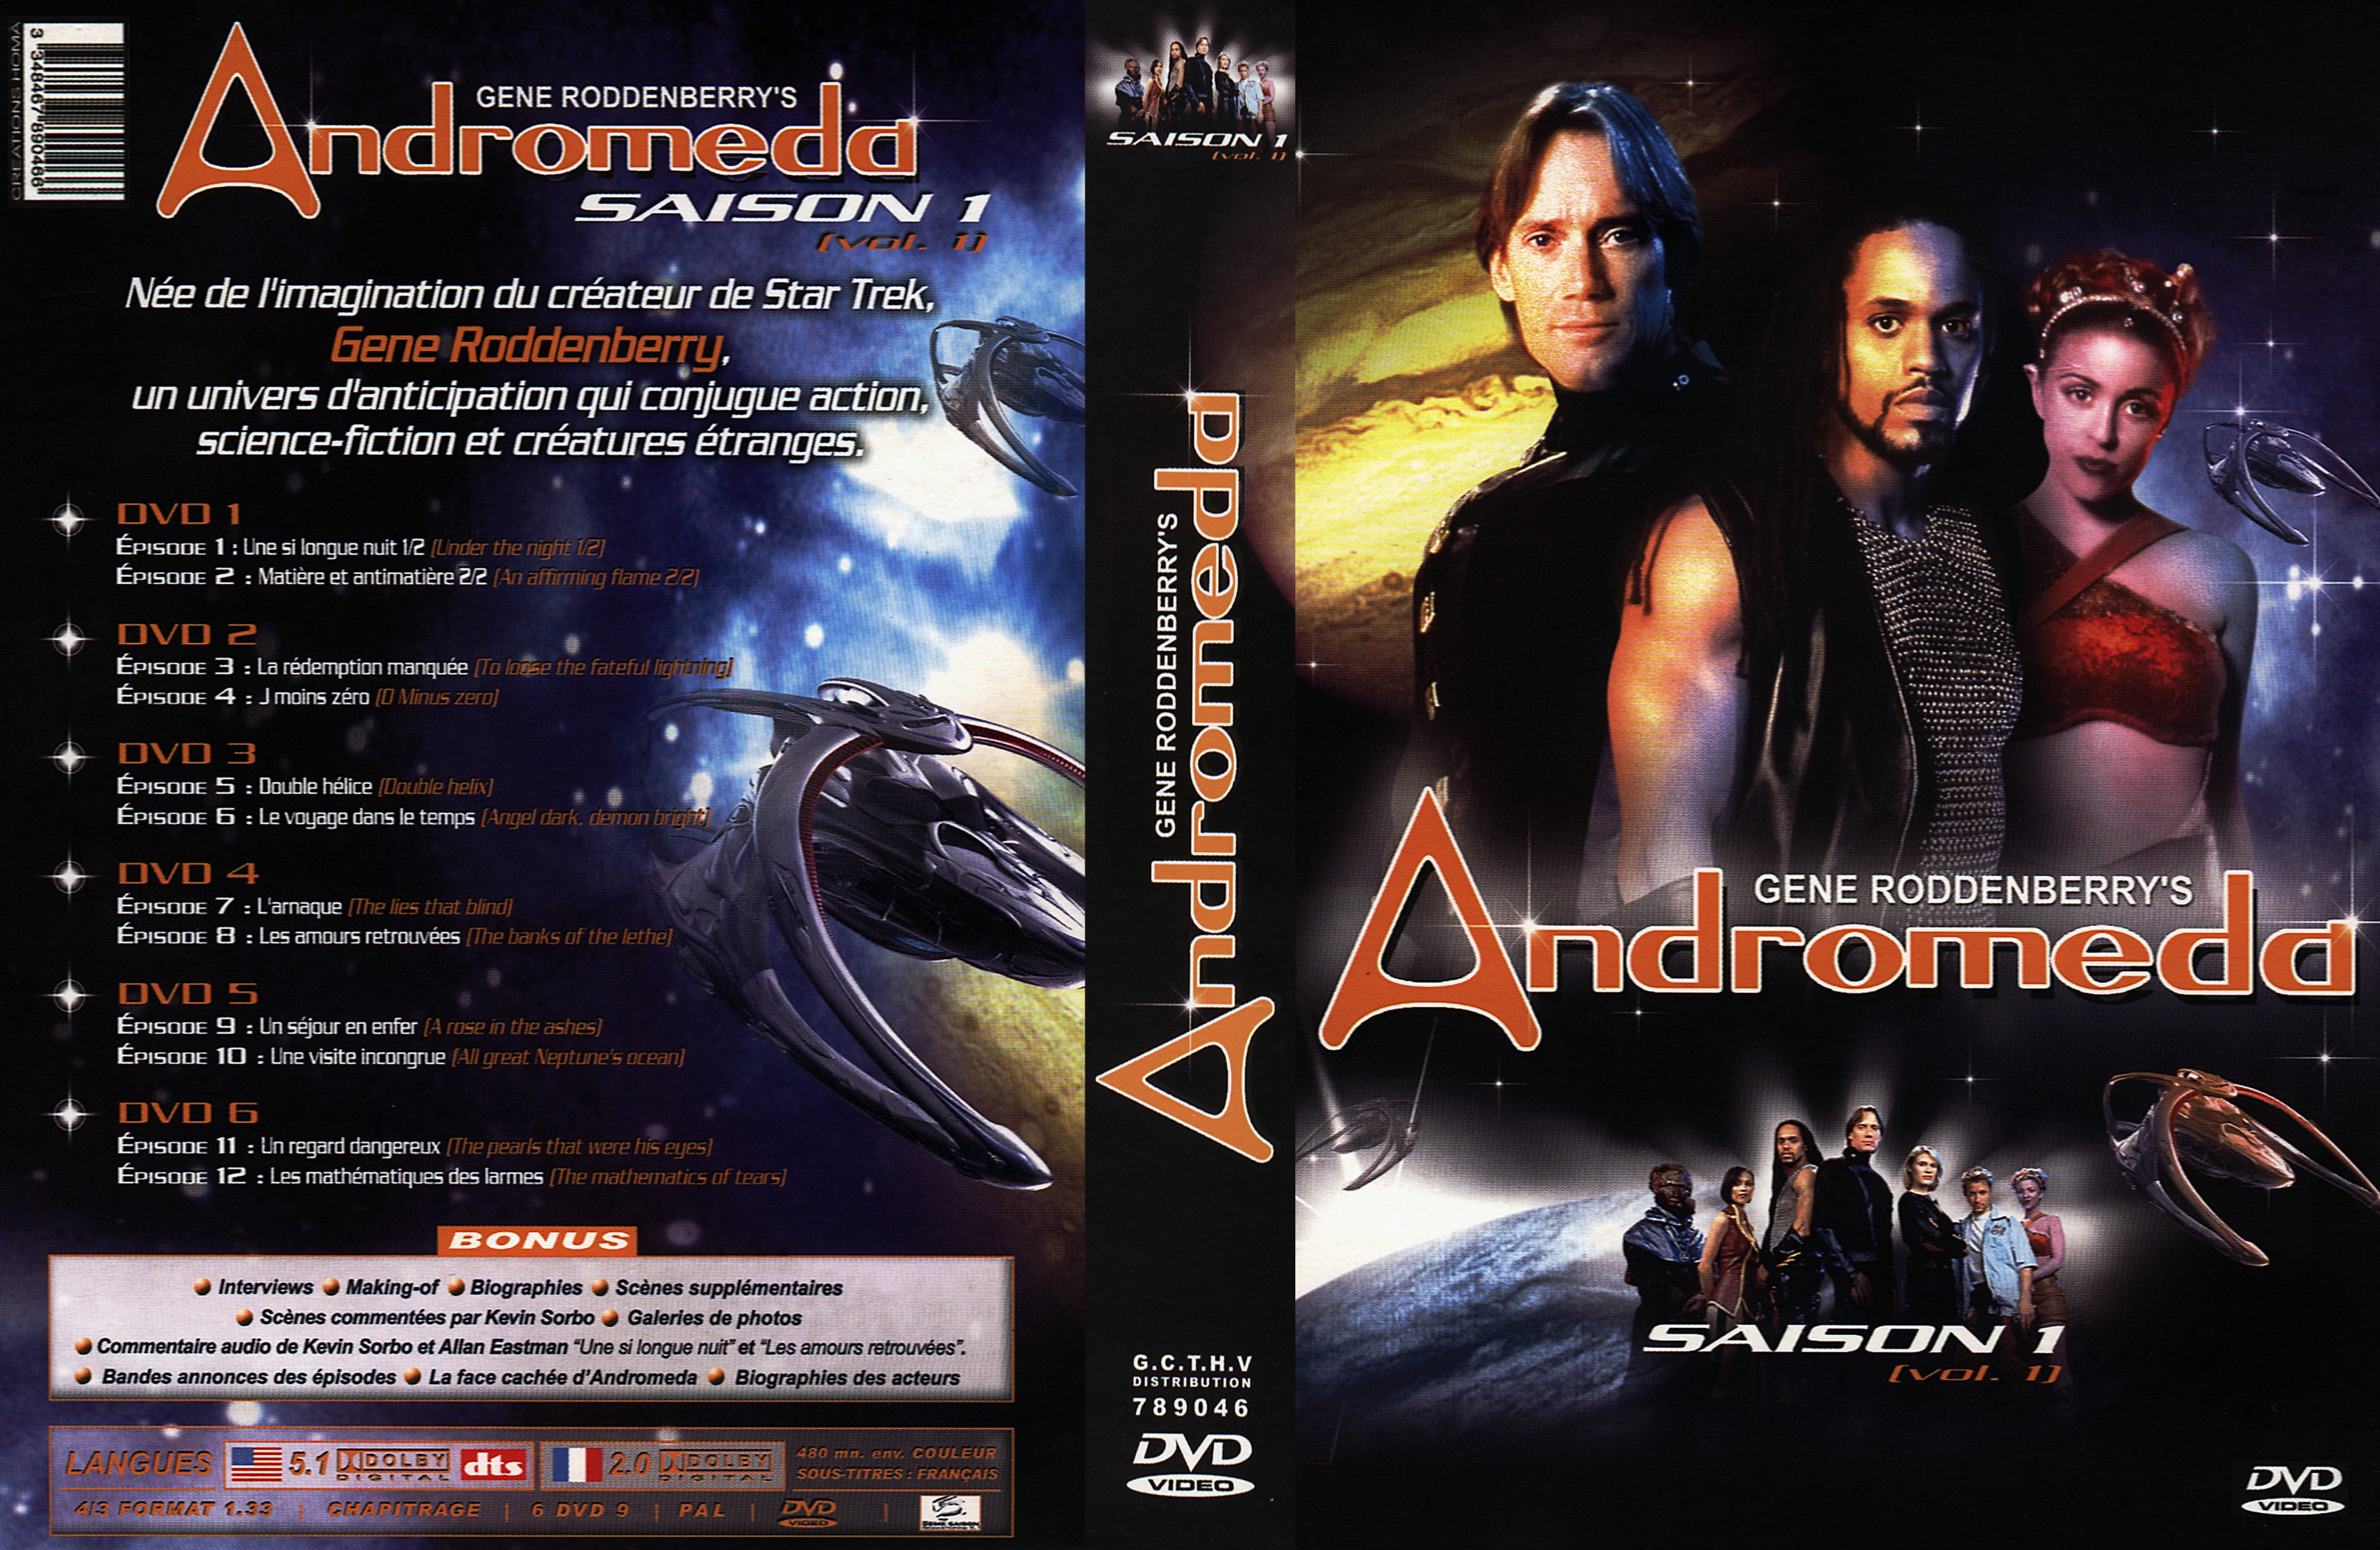 Jaquette DVD Andromeda Saison 1 DVD 1